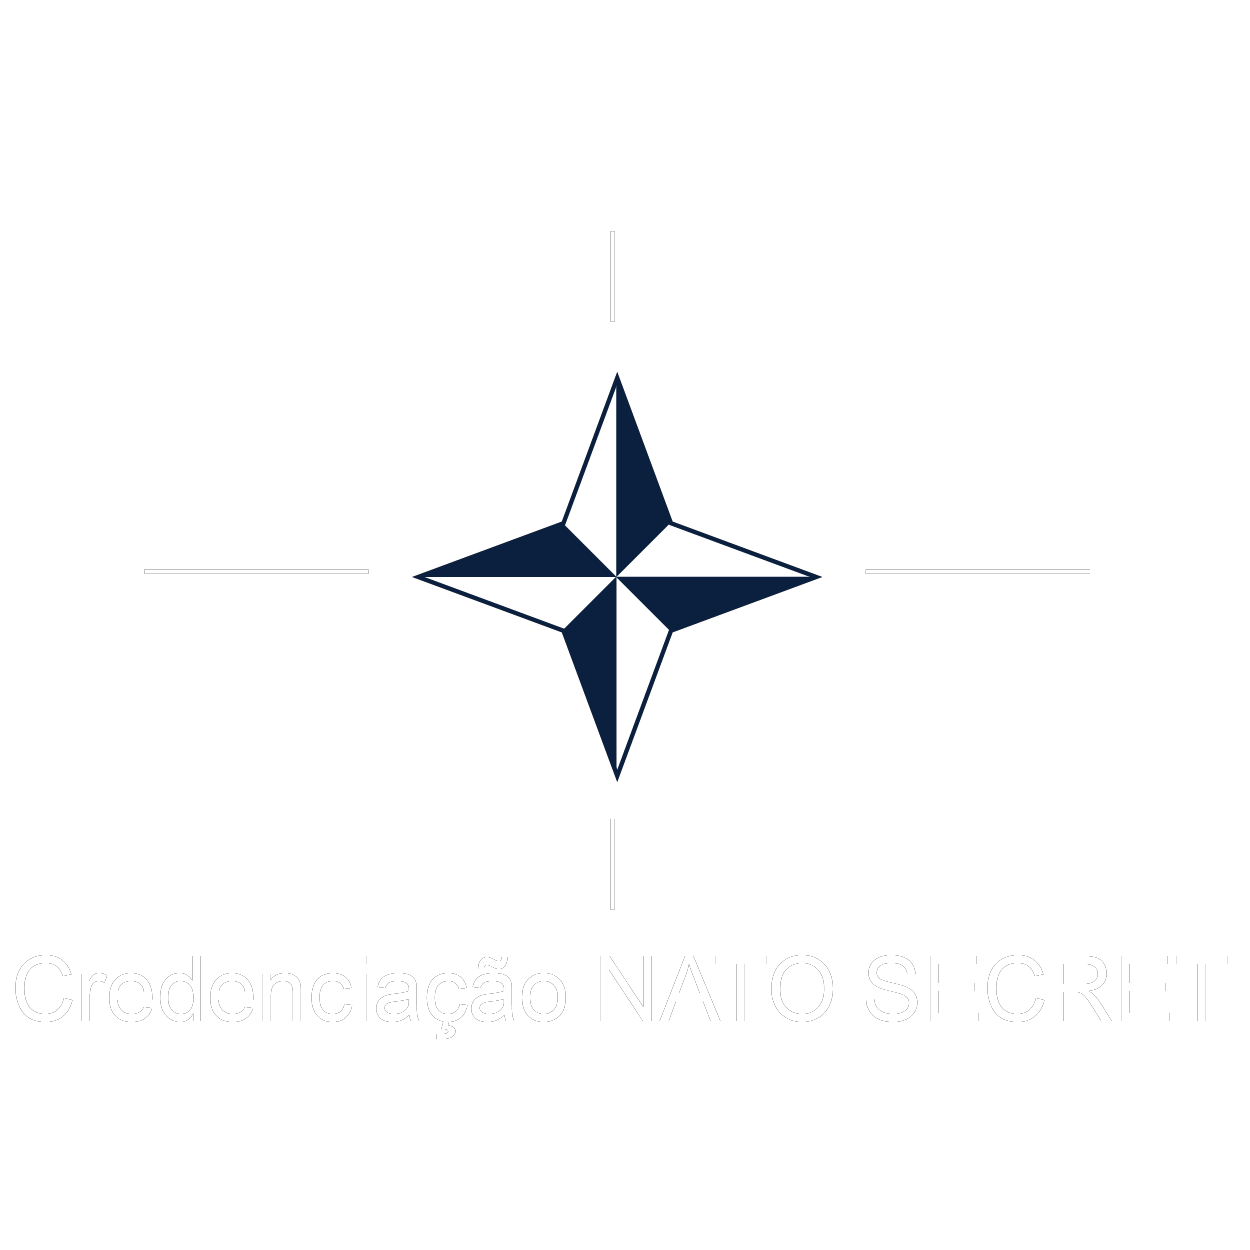 VisionWare_NATO SECRET